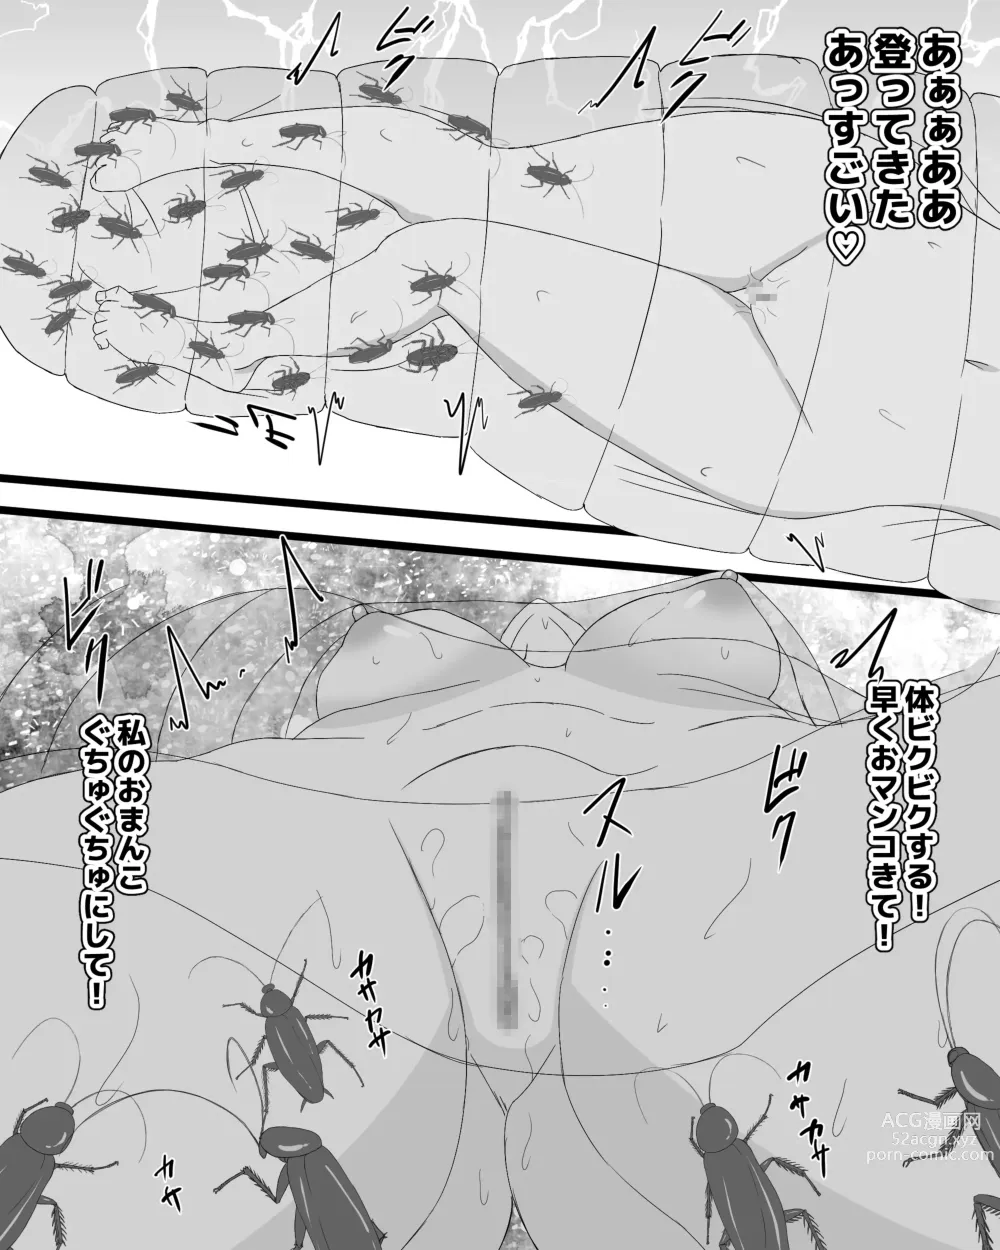 Page 20 of doujinshi Gokiburi furo